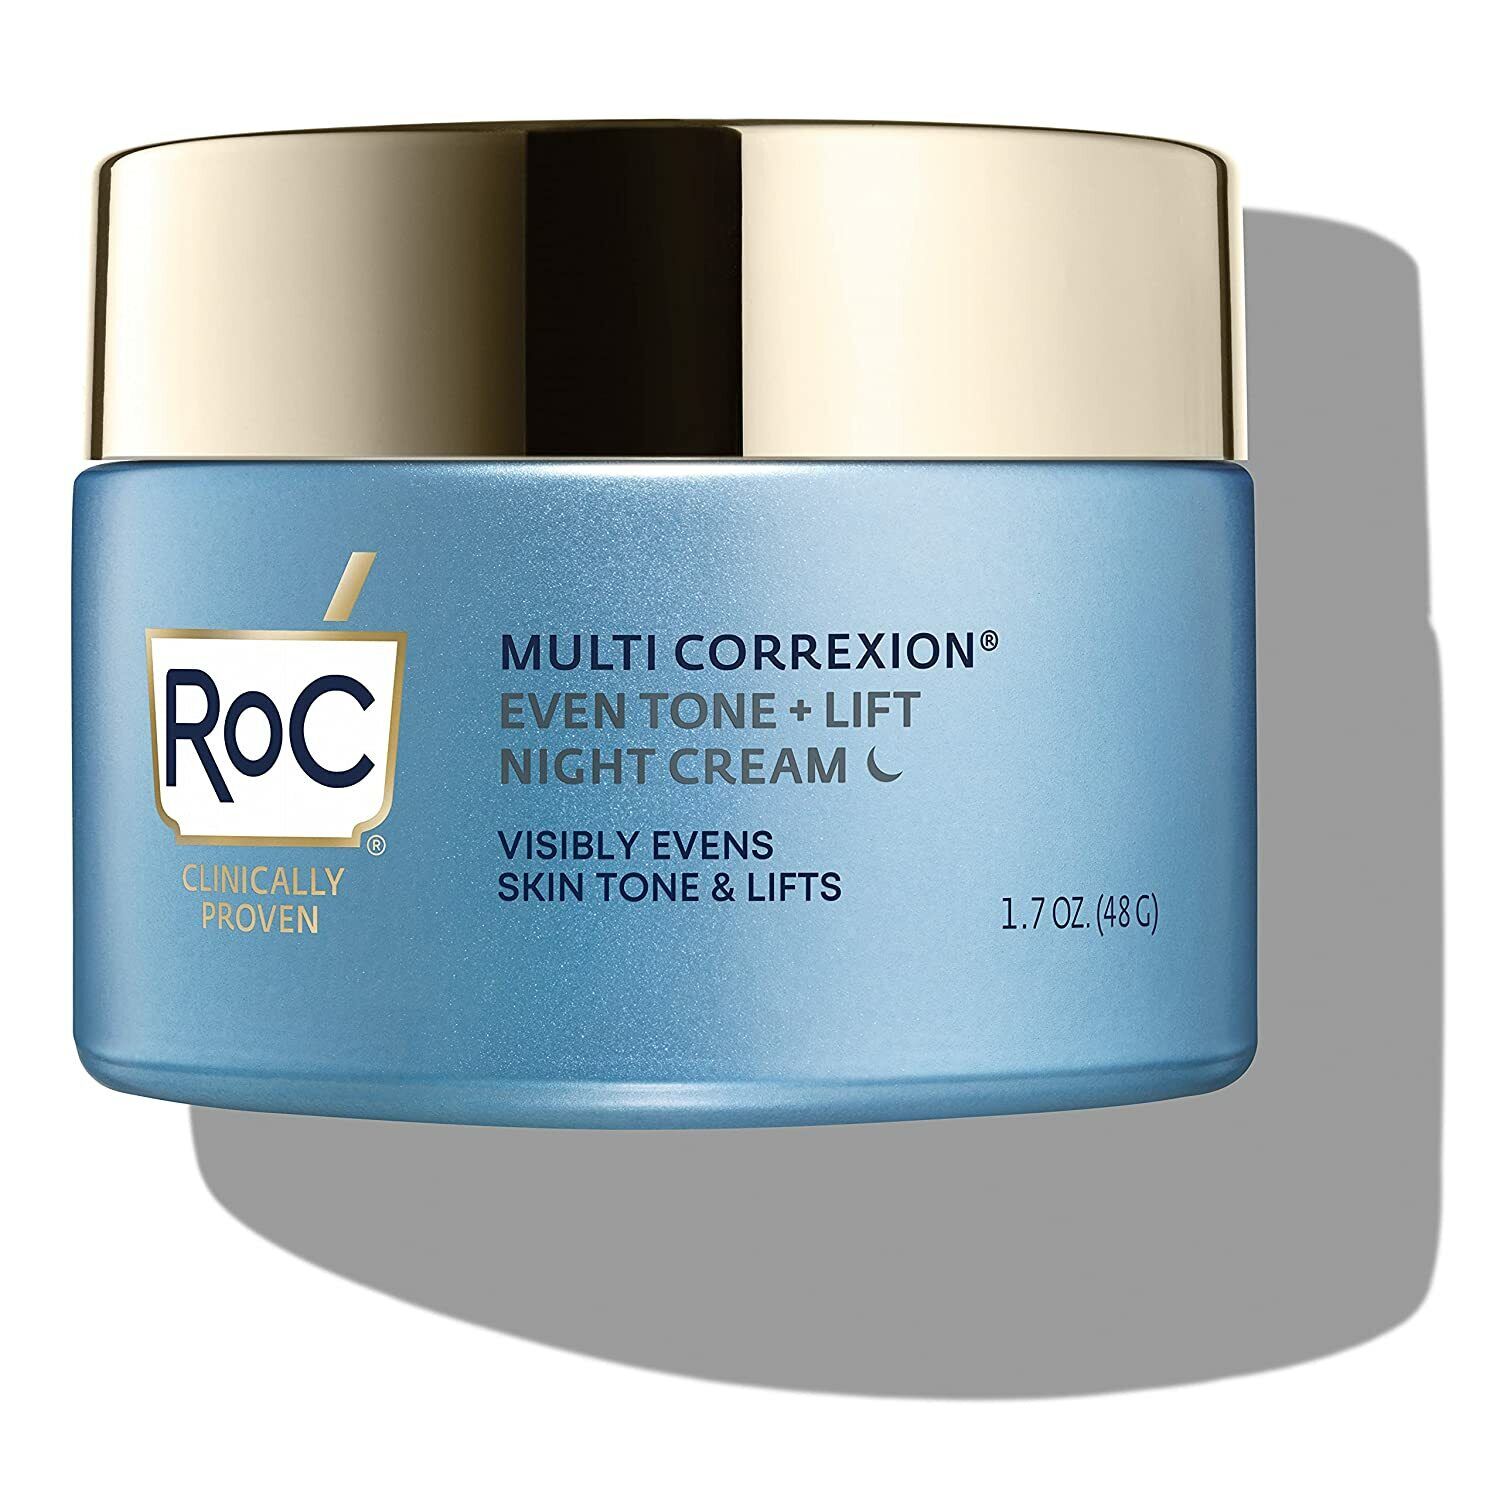 RoC Multi Correxion 5 -1 Restoring/Anti Aging Facial Night Cream 1.7 Oz. #1891DA